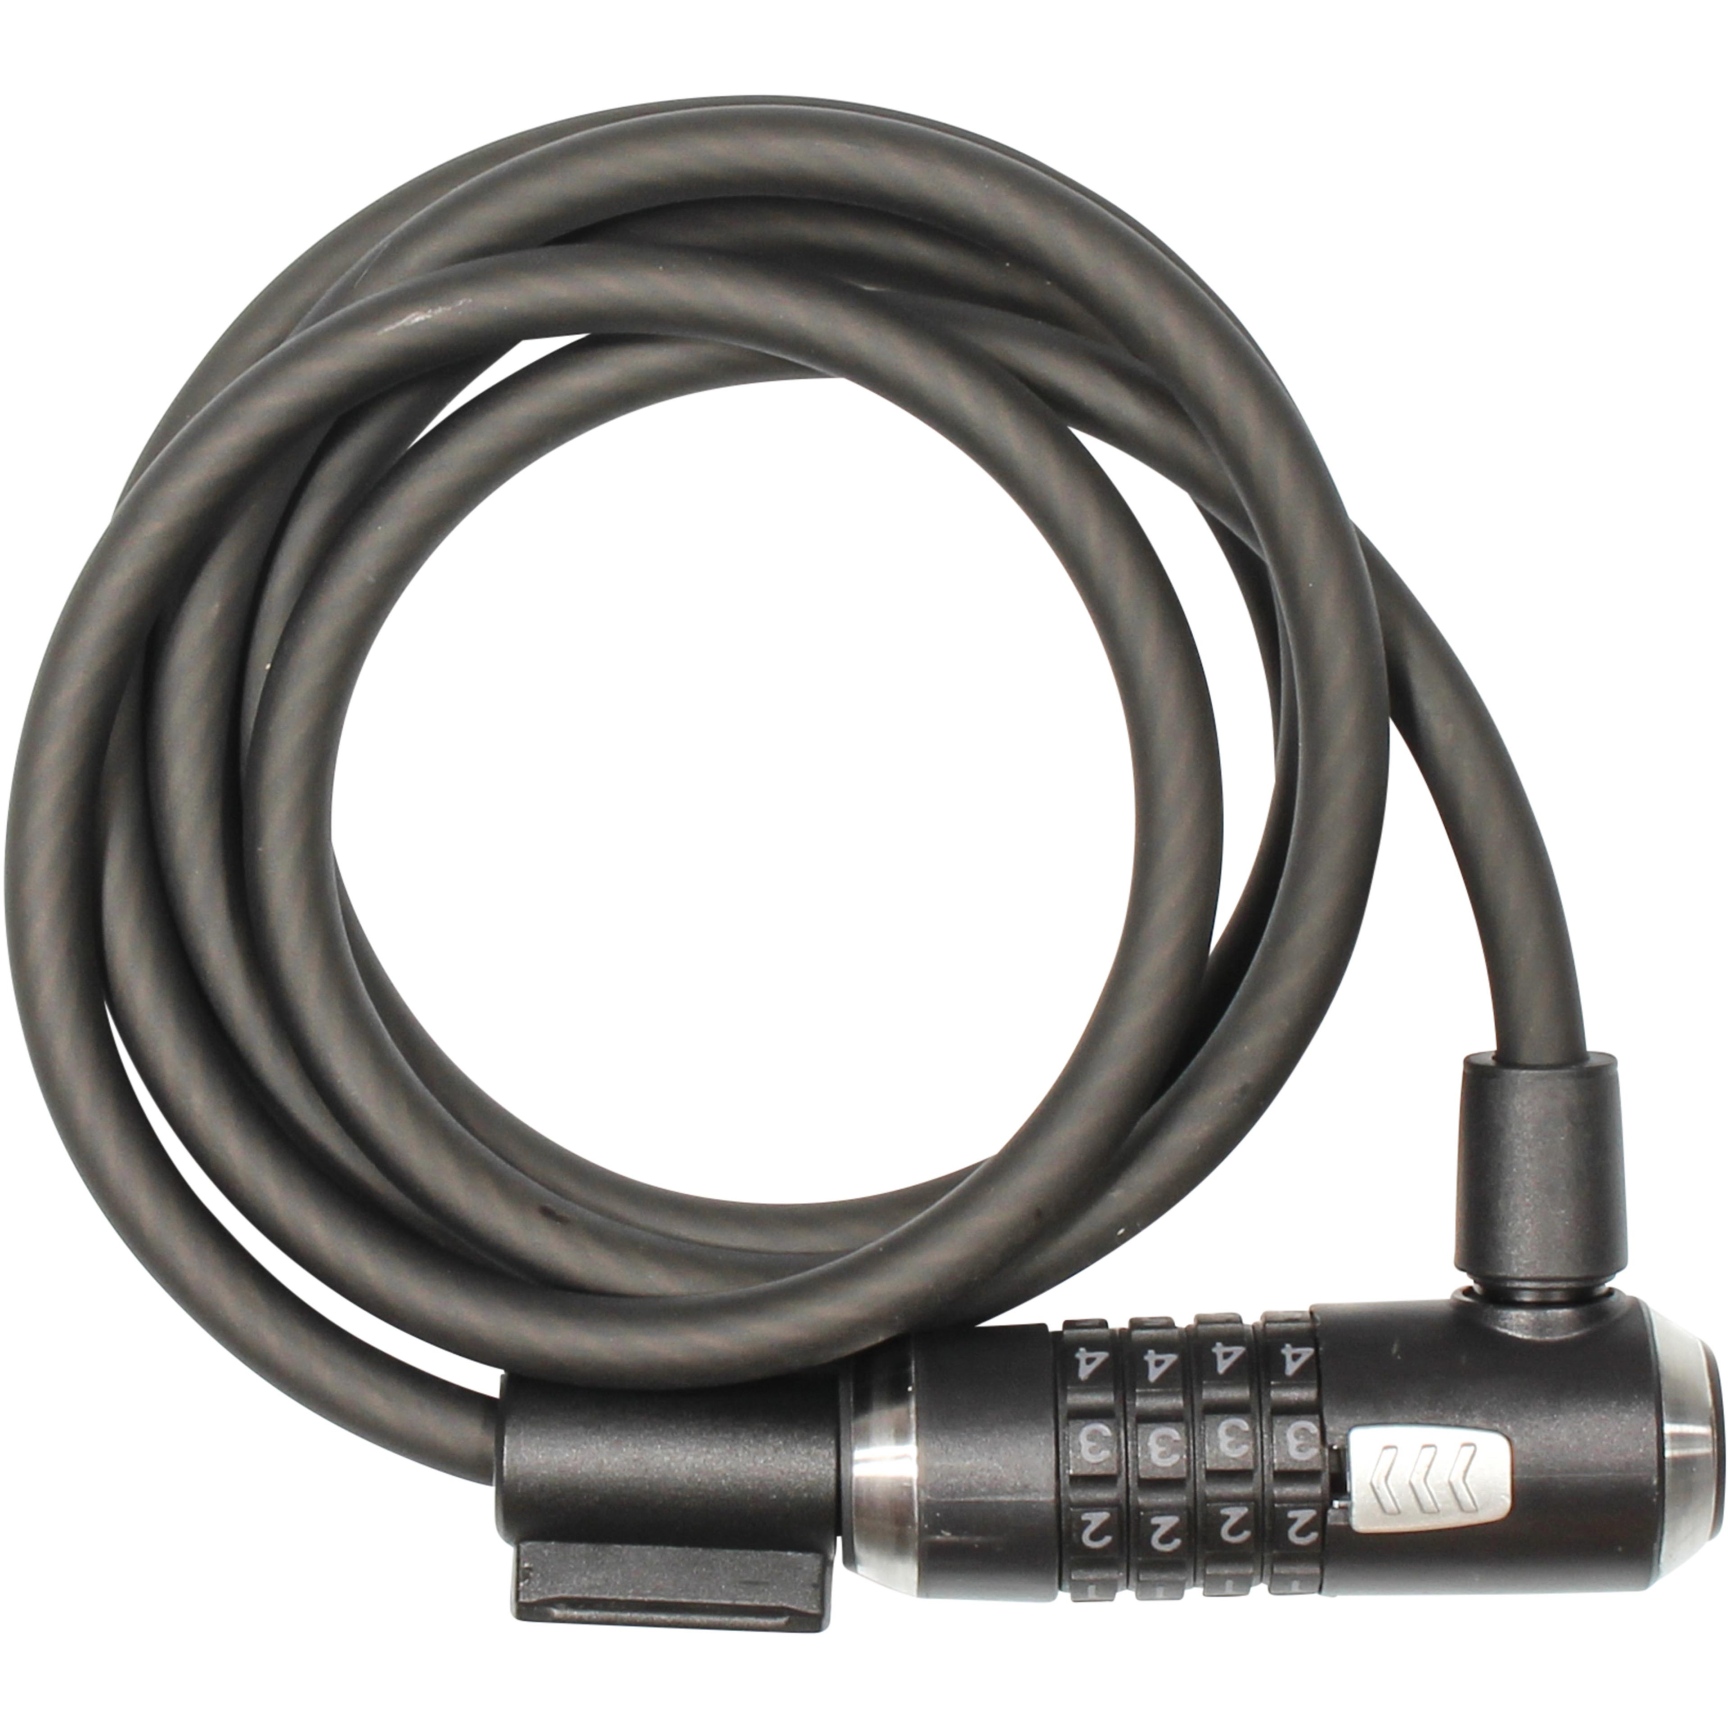 Productfoto van Kryptonite KryptoFlex 1018 Combo Cable Lock - black